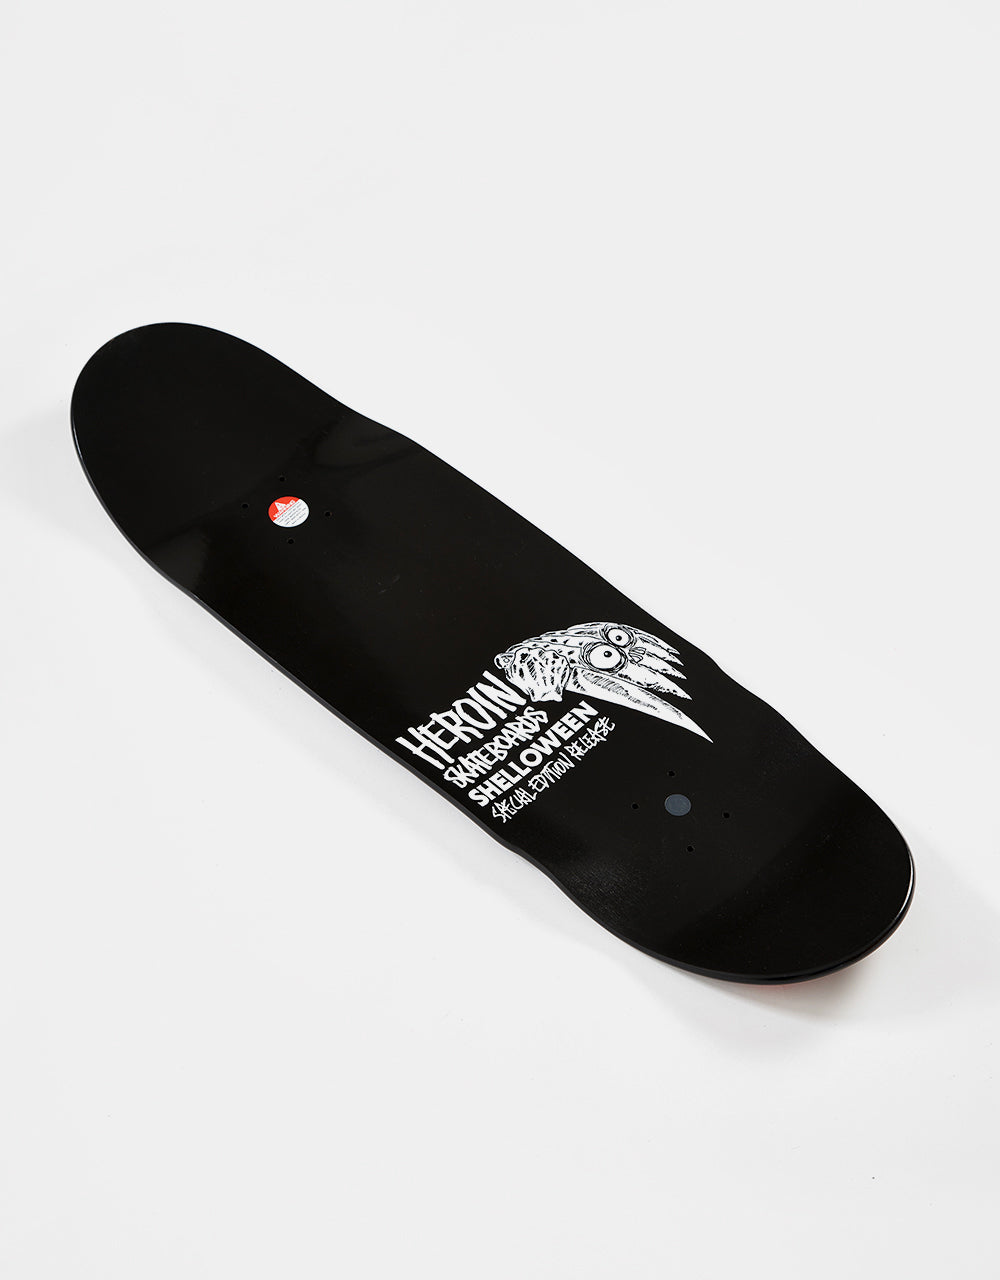 Heroin Shelloween Skateboard Deck - 9.625”